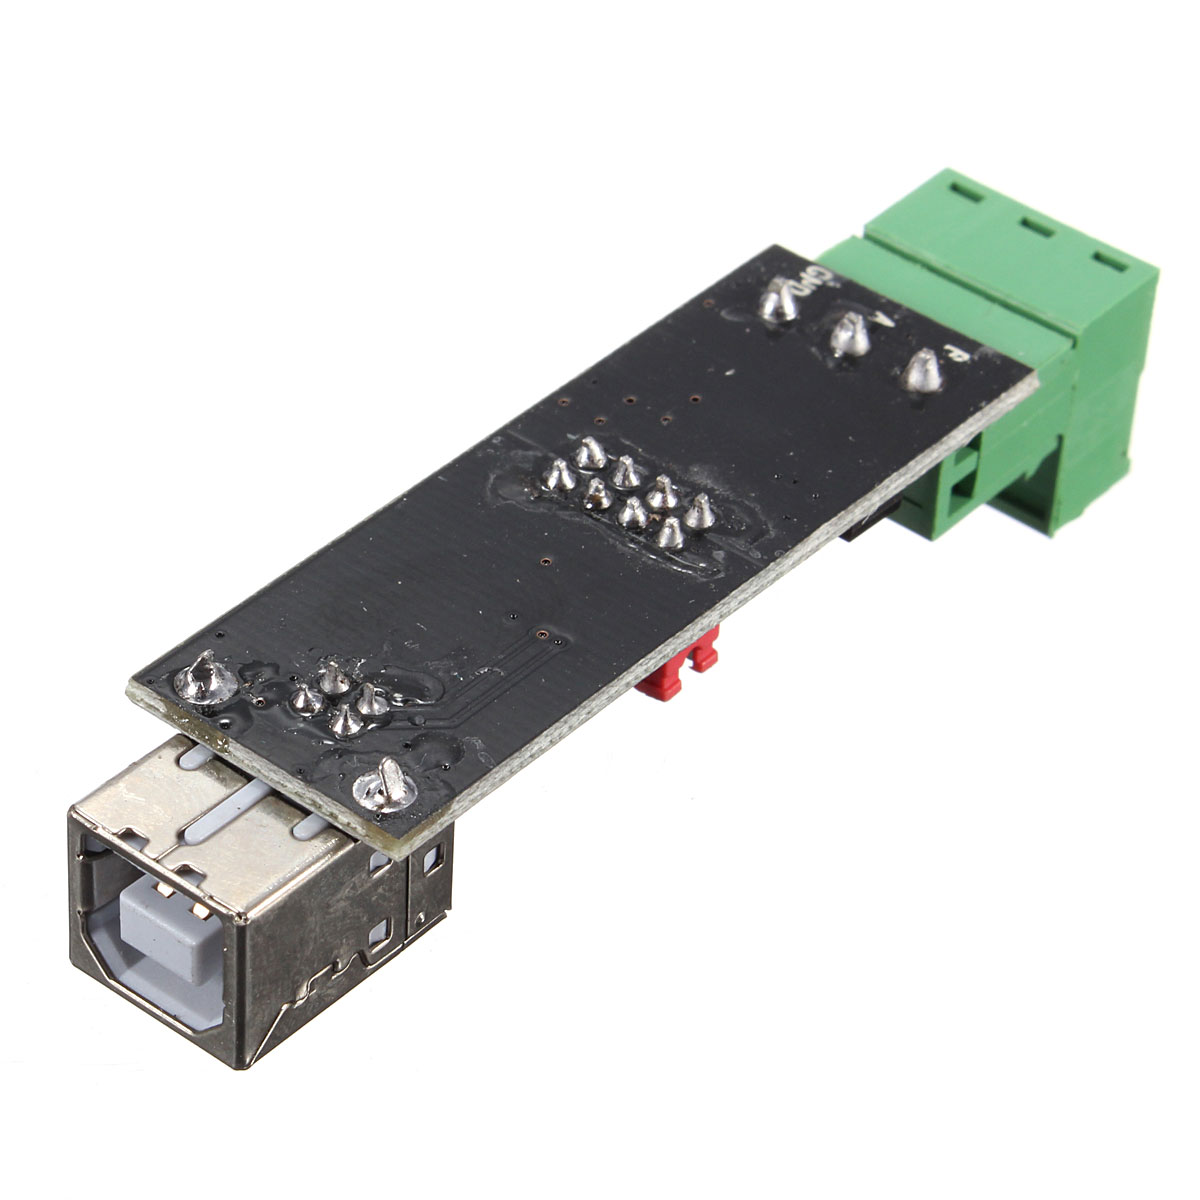 Geekcreitreg-USB-To-RS485-TTL-Serial-Converter-Adapter-FTDI-Interface-FT232RL-75176-Module-961537